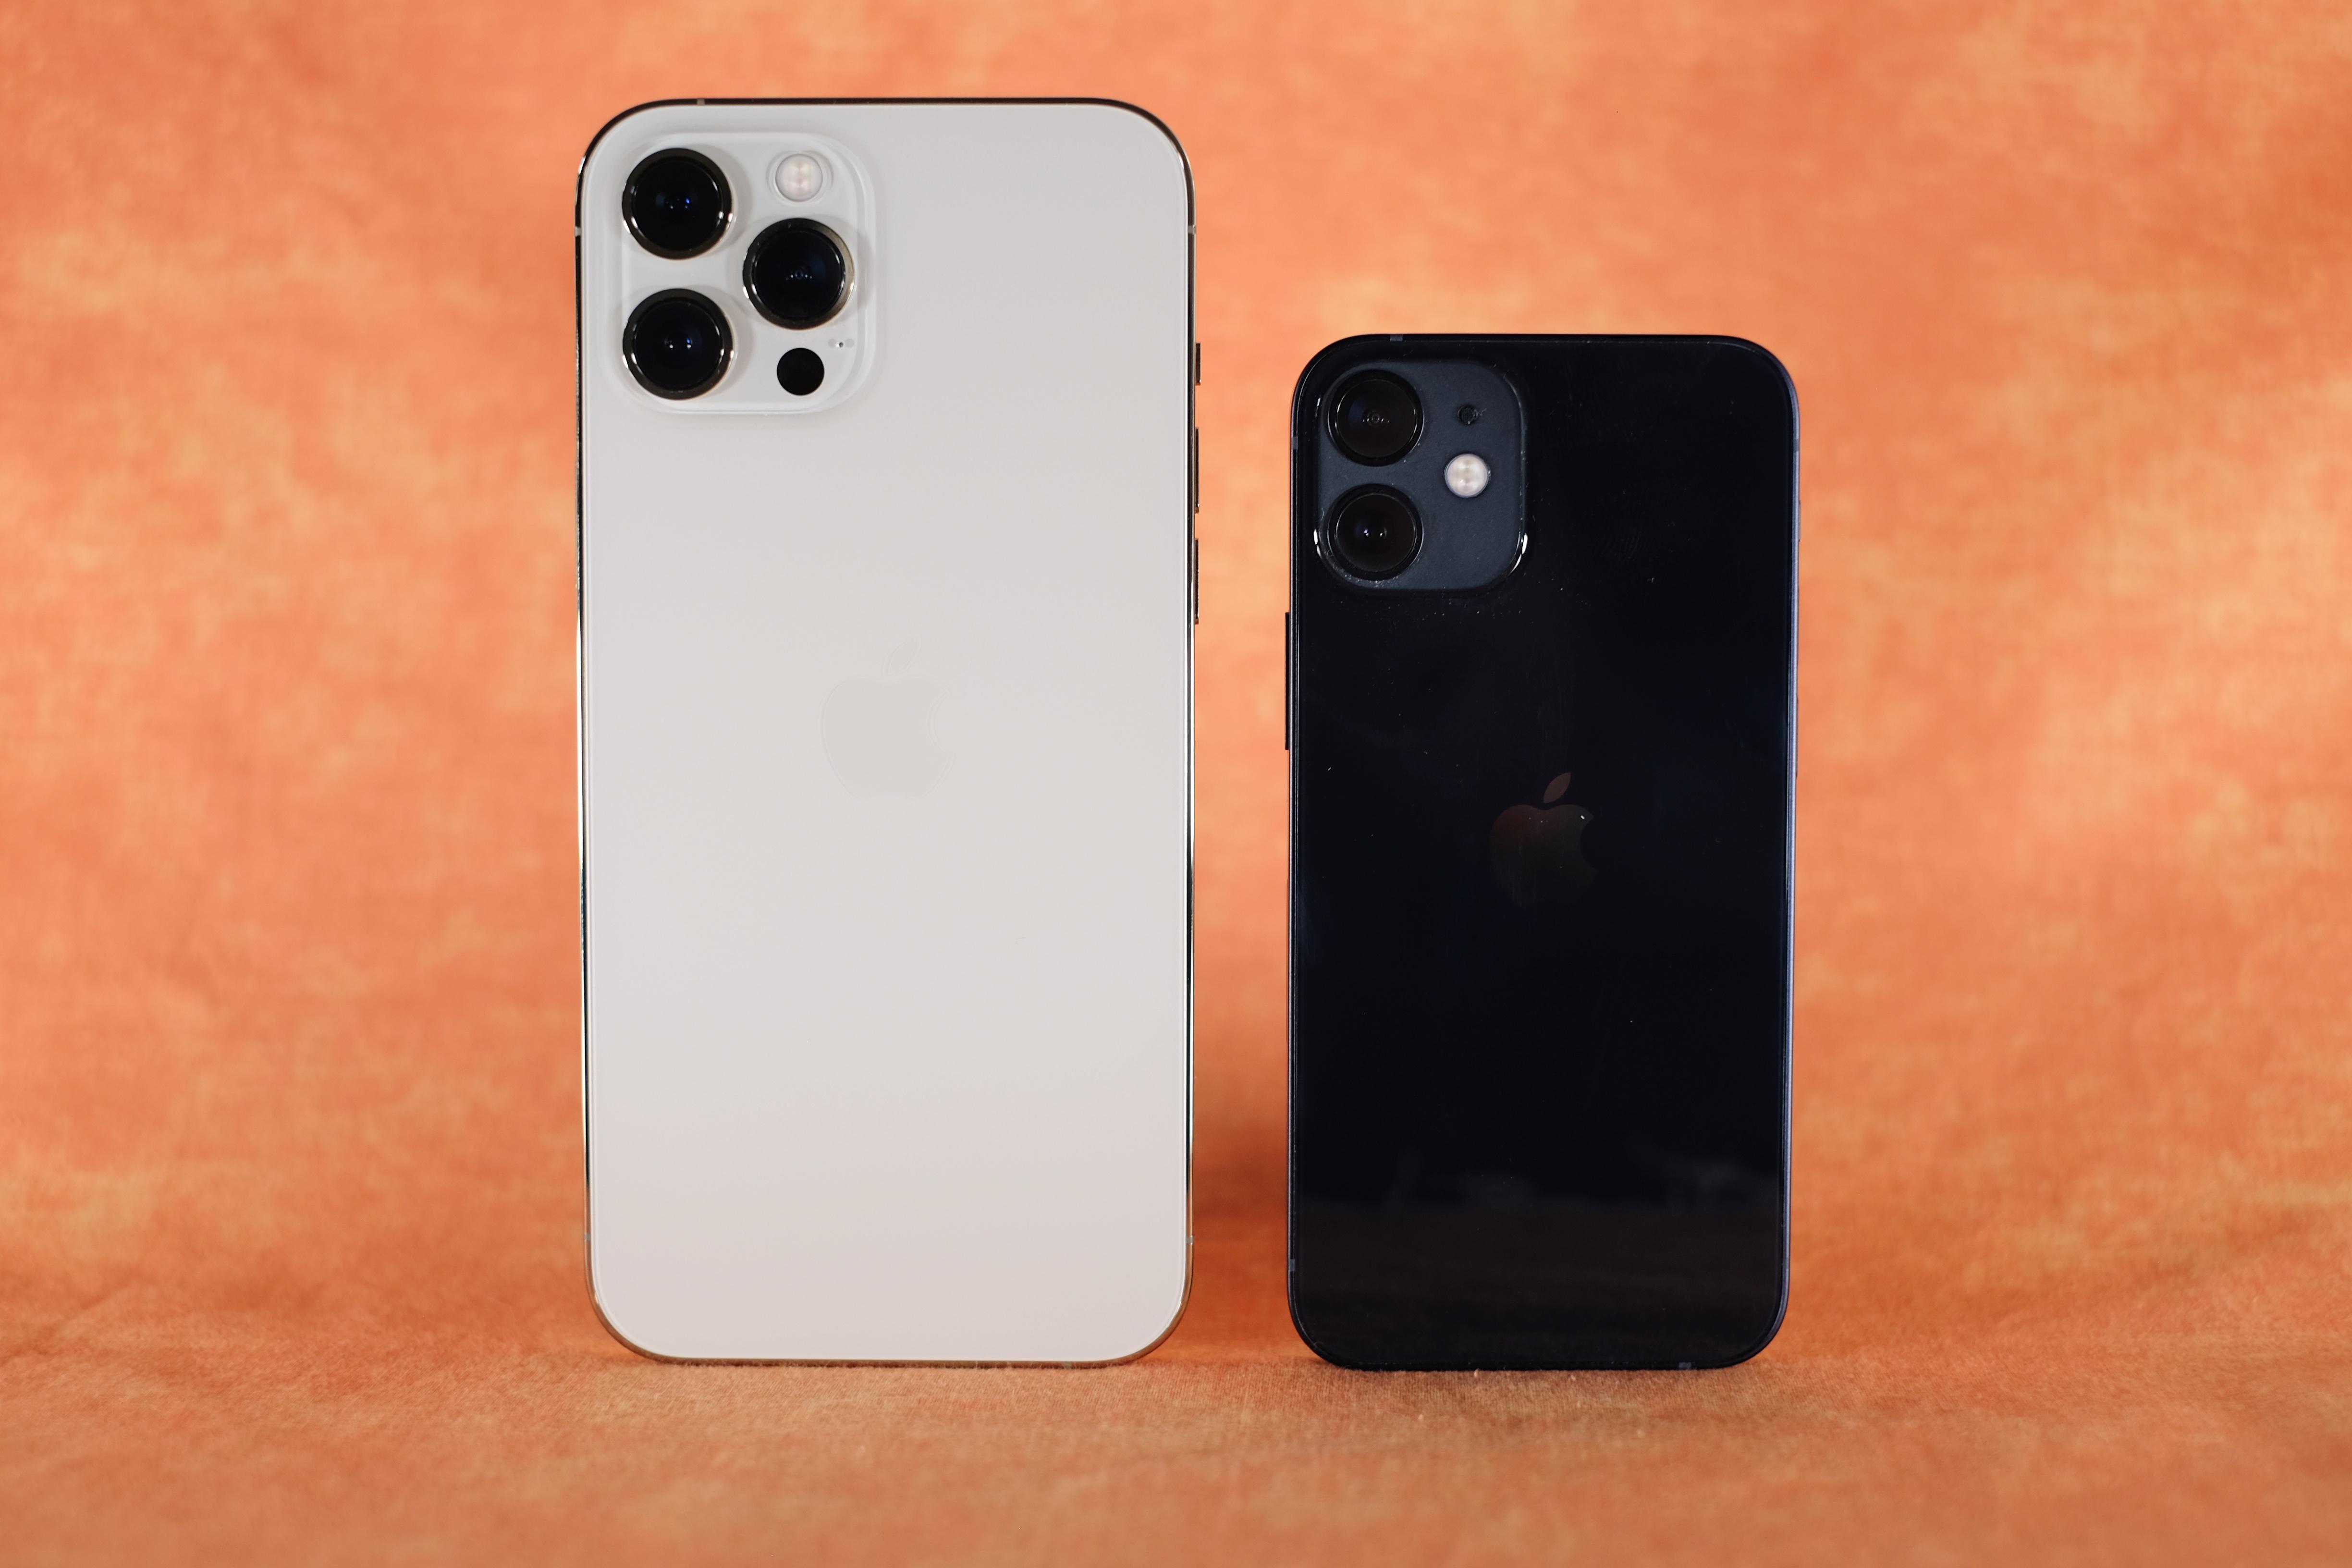 Iphone 12 Mini vs 11 Pro Max